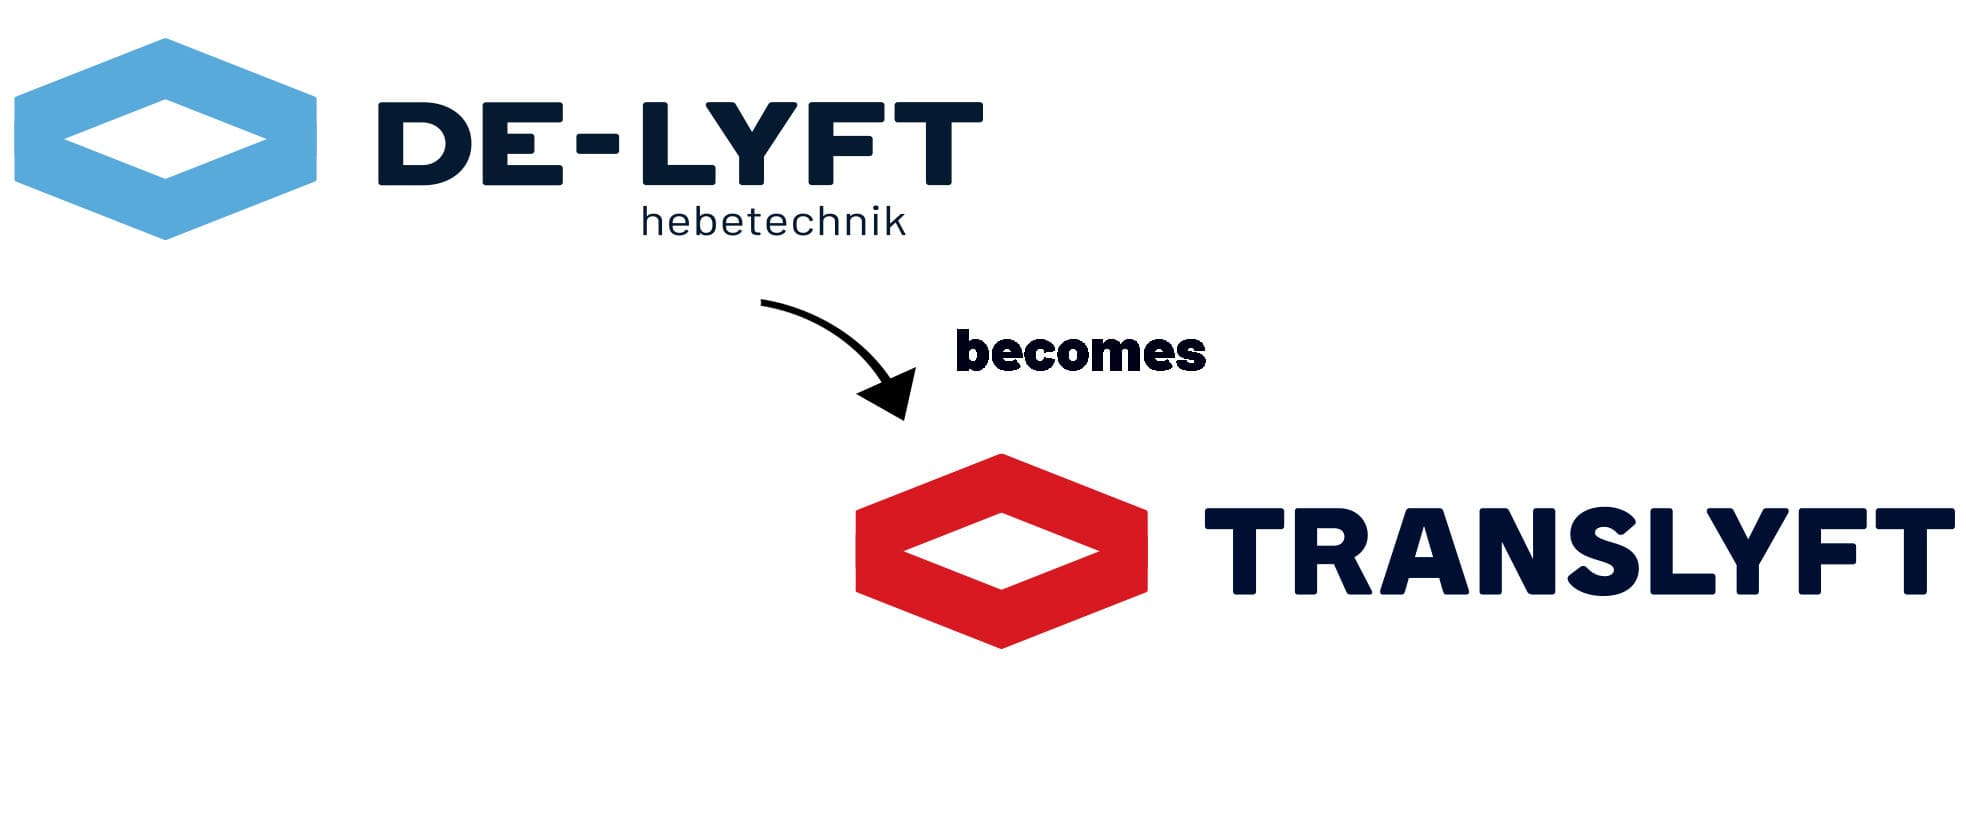 DE-LYFT becomes translyft 